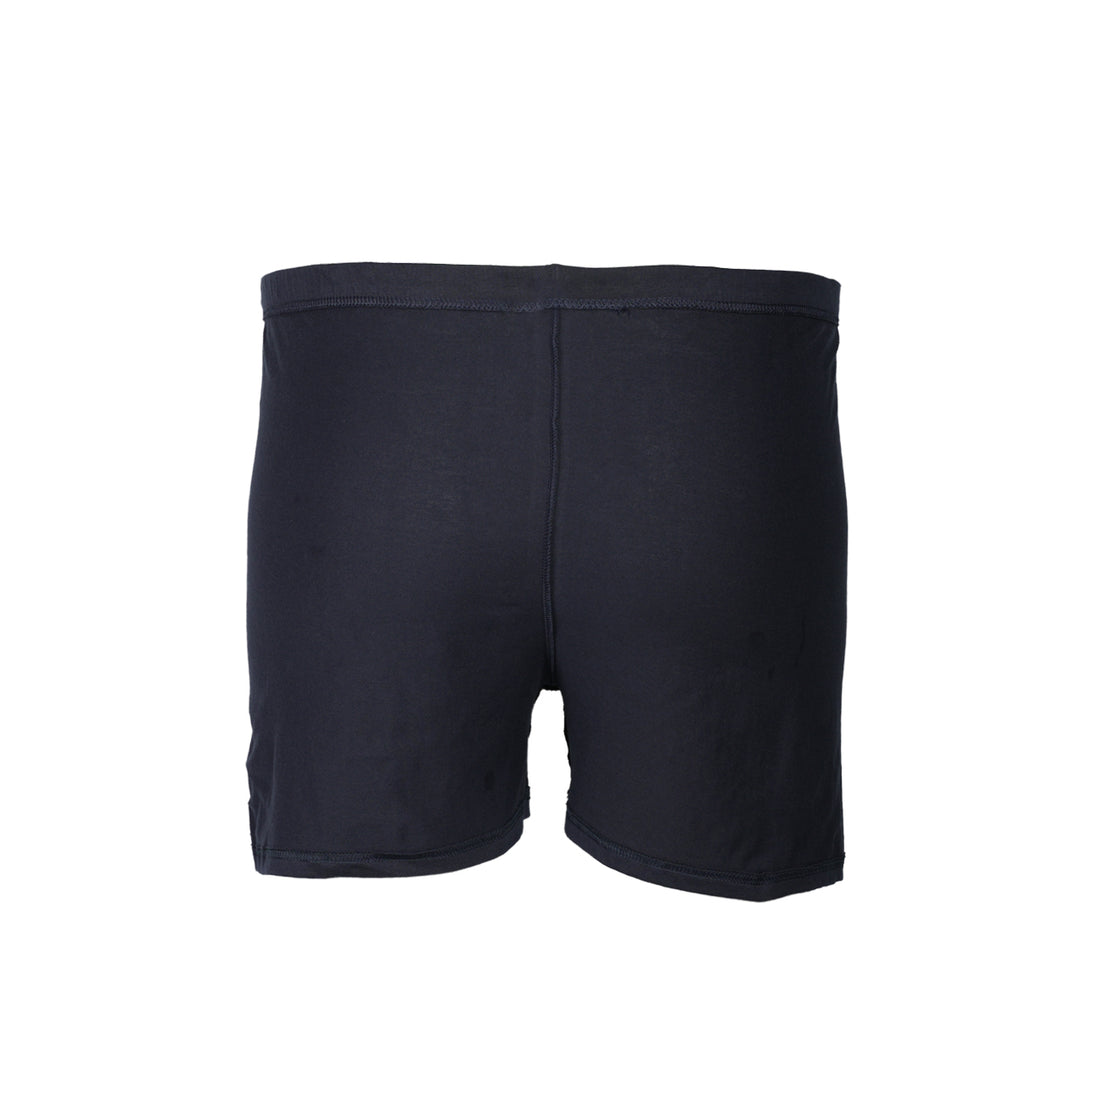 CECEBA Men's Boxer Shorts - Pack of 2